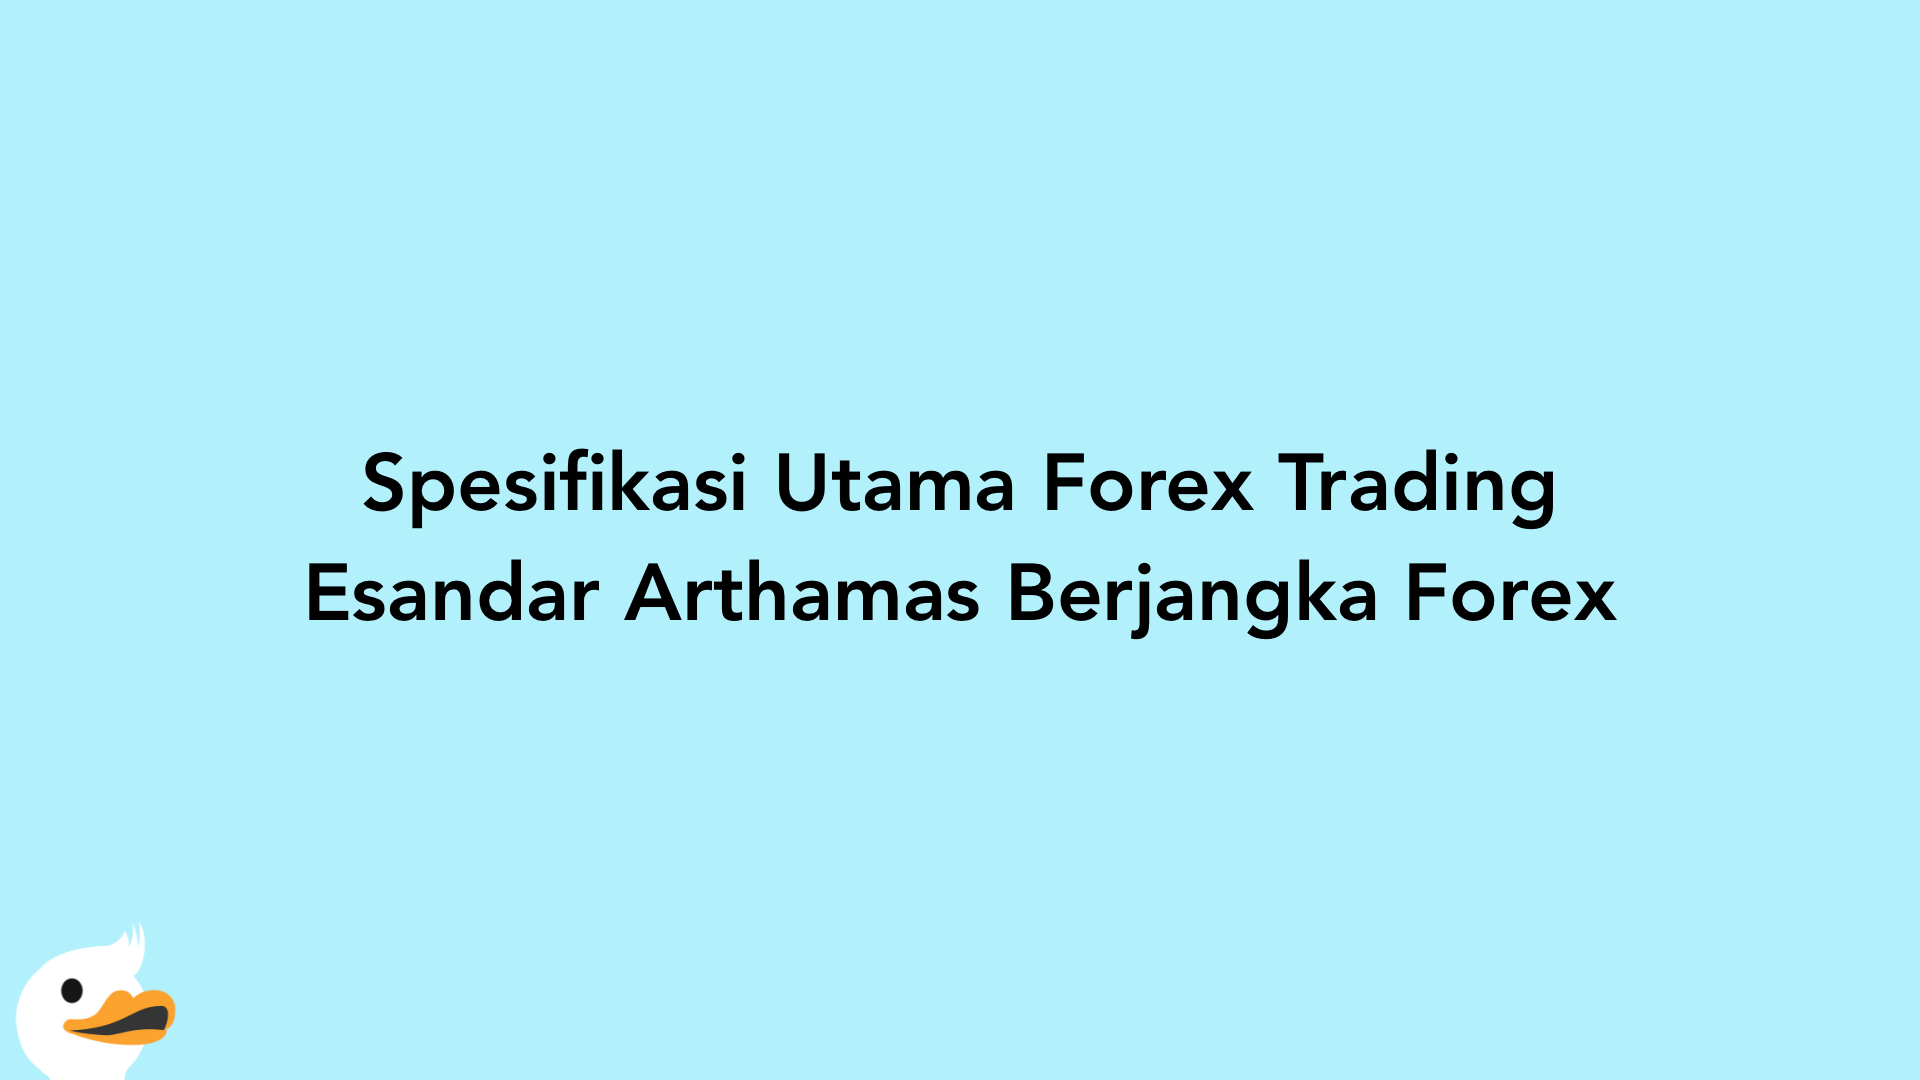 Spesifikasi Utama Forex Trading Esandar Arthamas Berjangka Forex